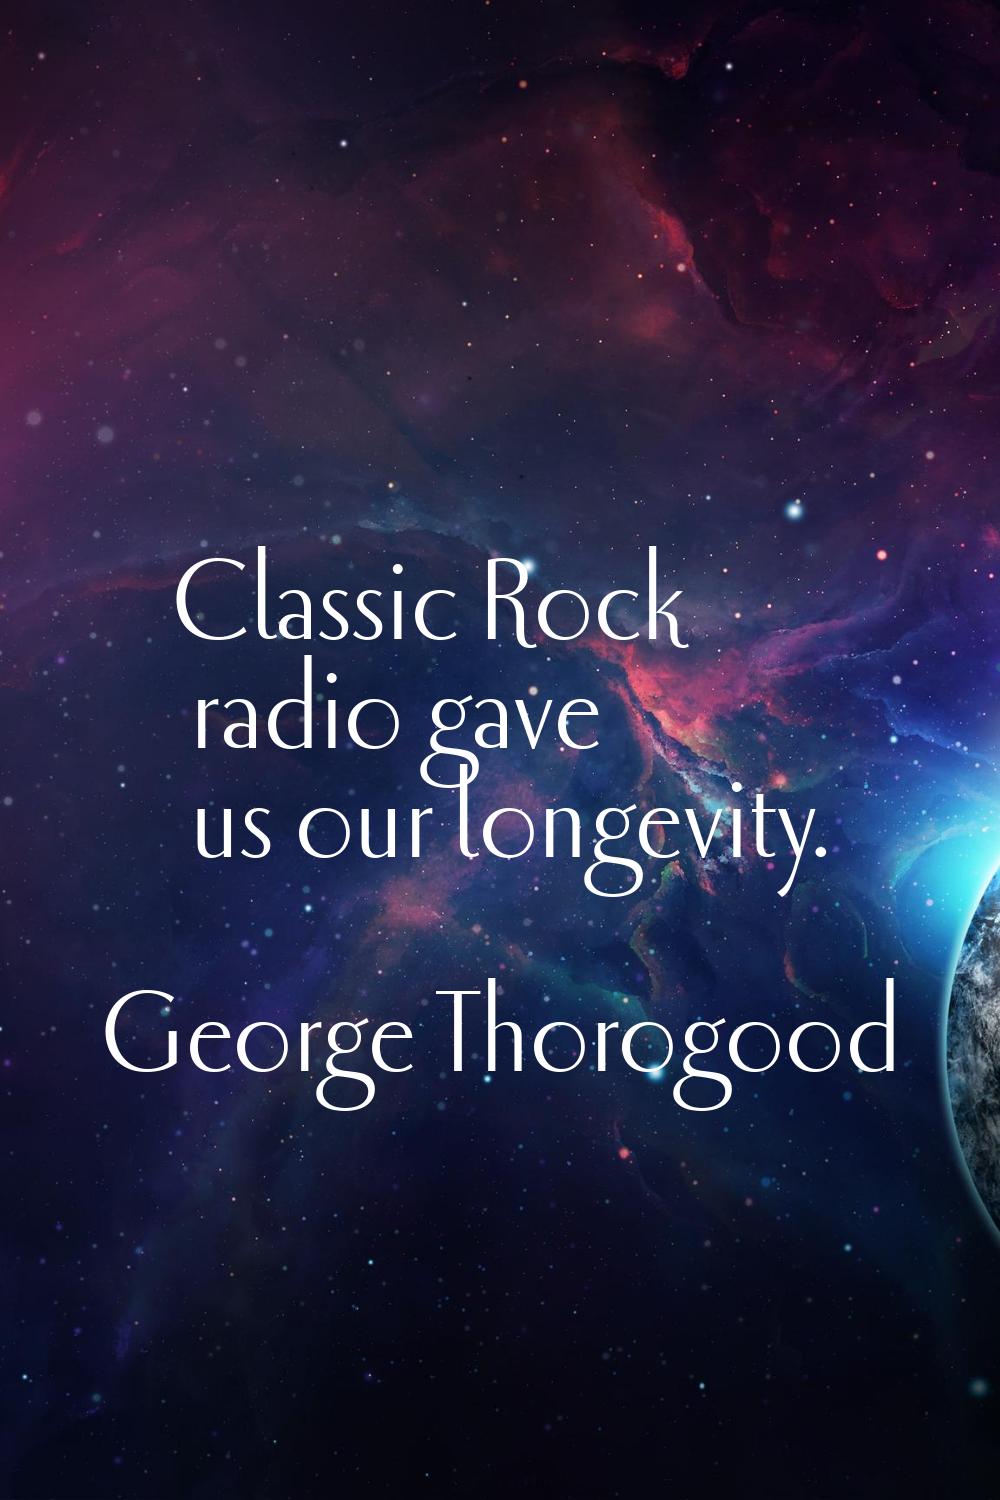 Classic Rock radio gave us our longevity.